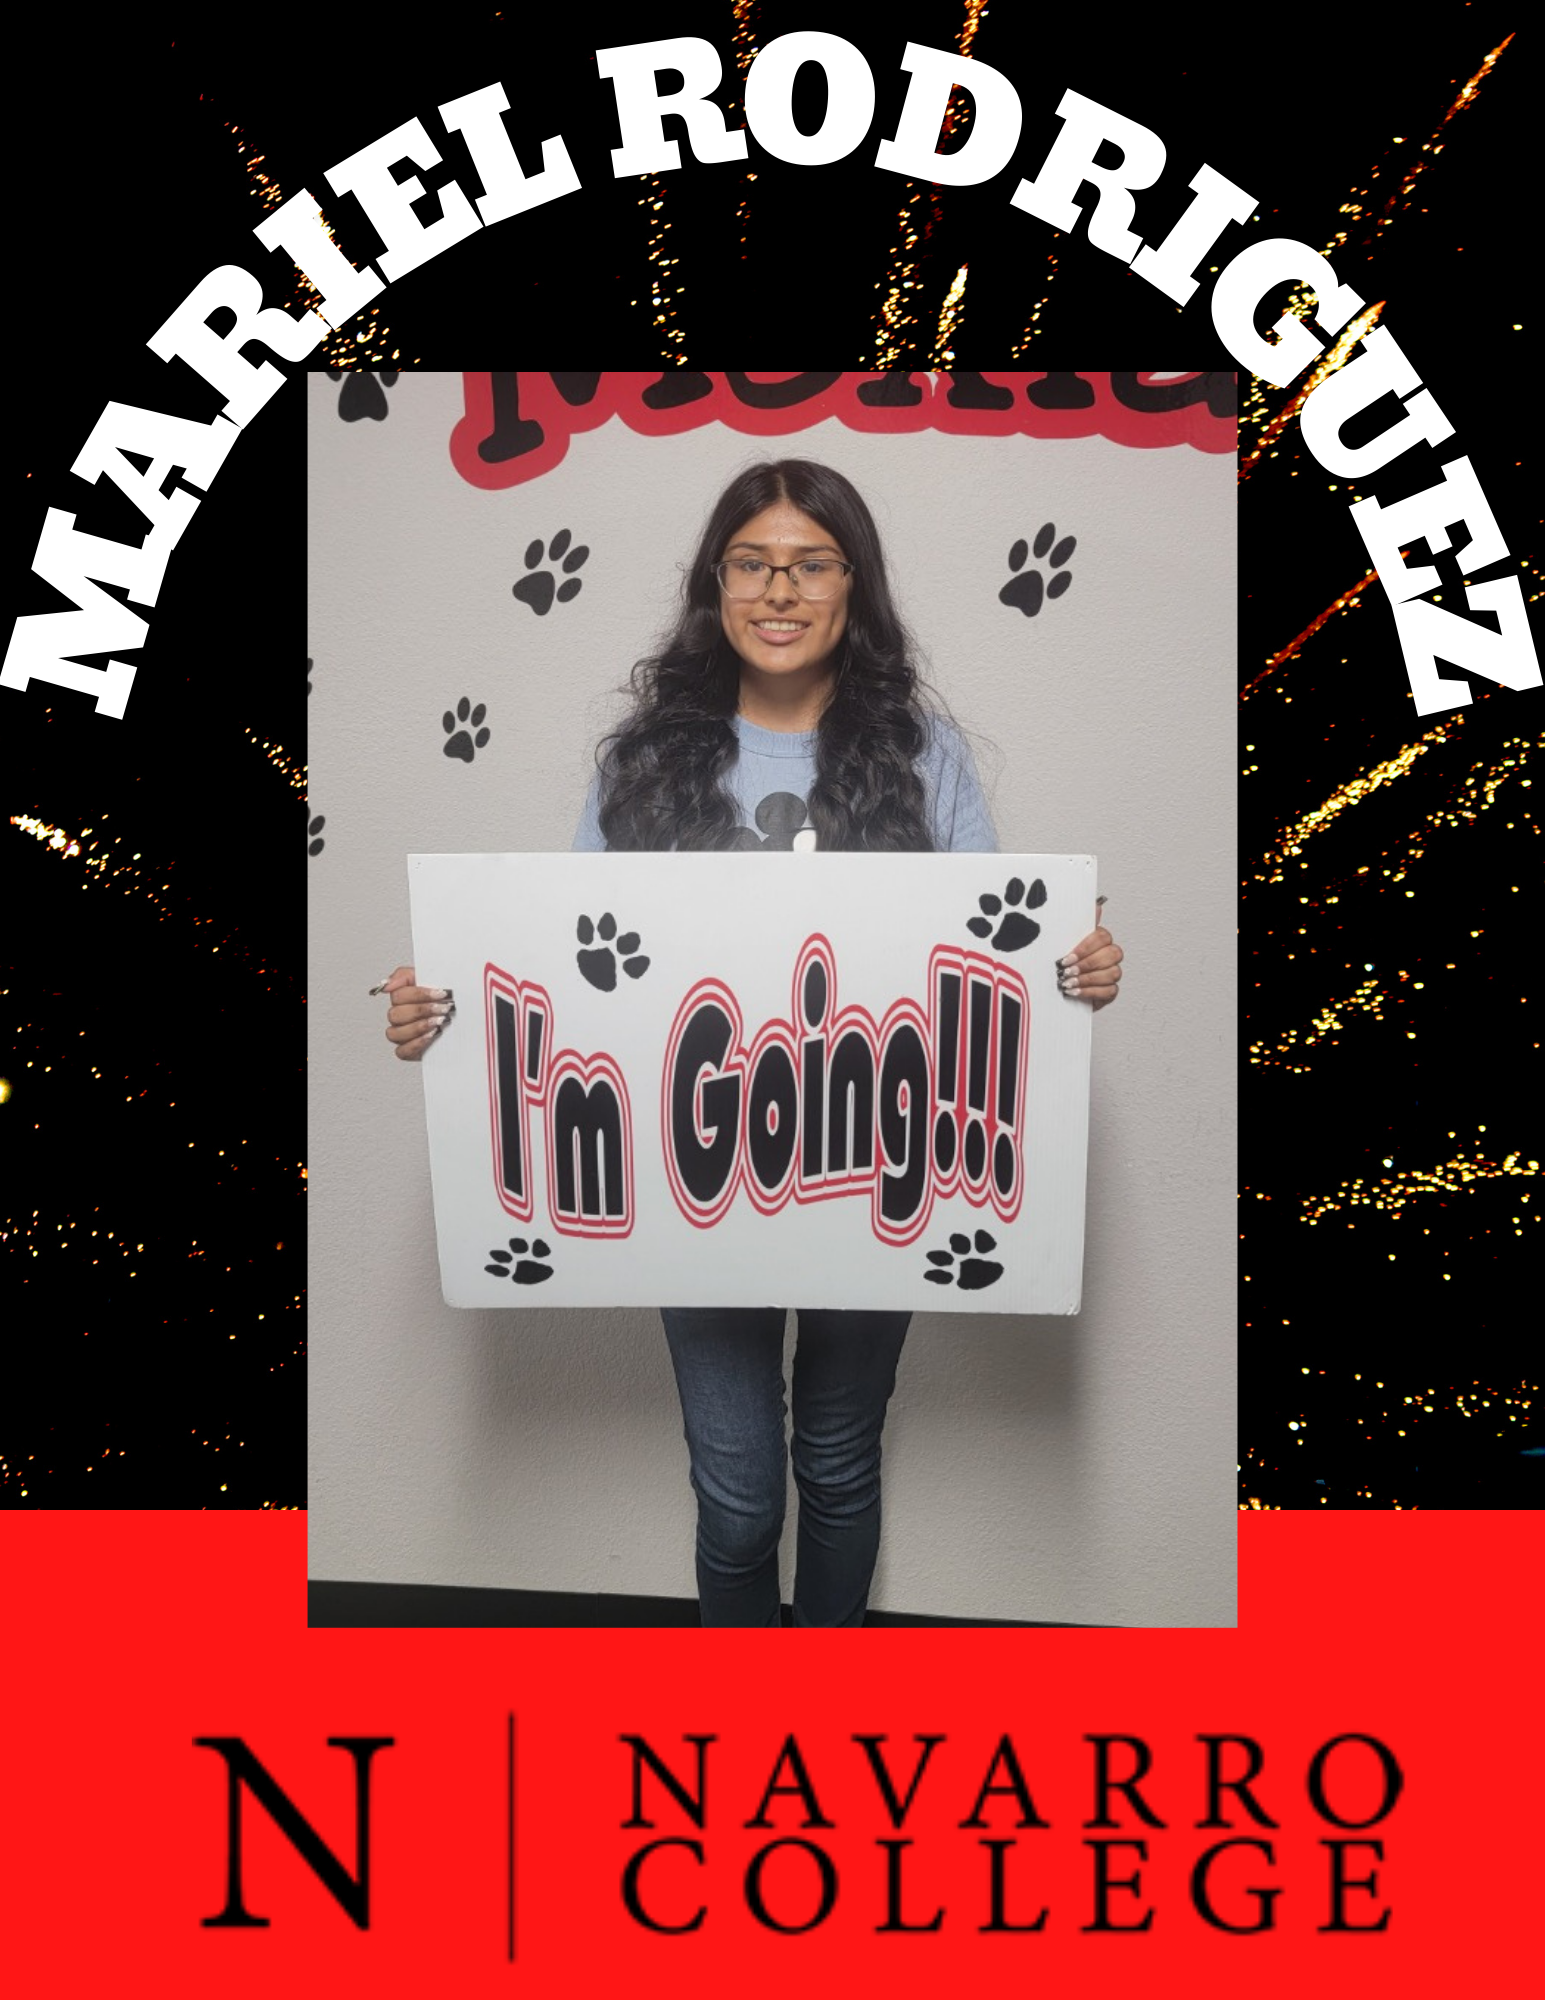 Mariel Rodriguez - I'm Going! - Navarro College